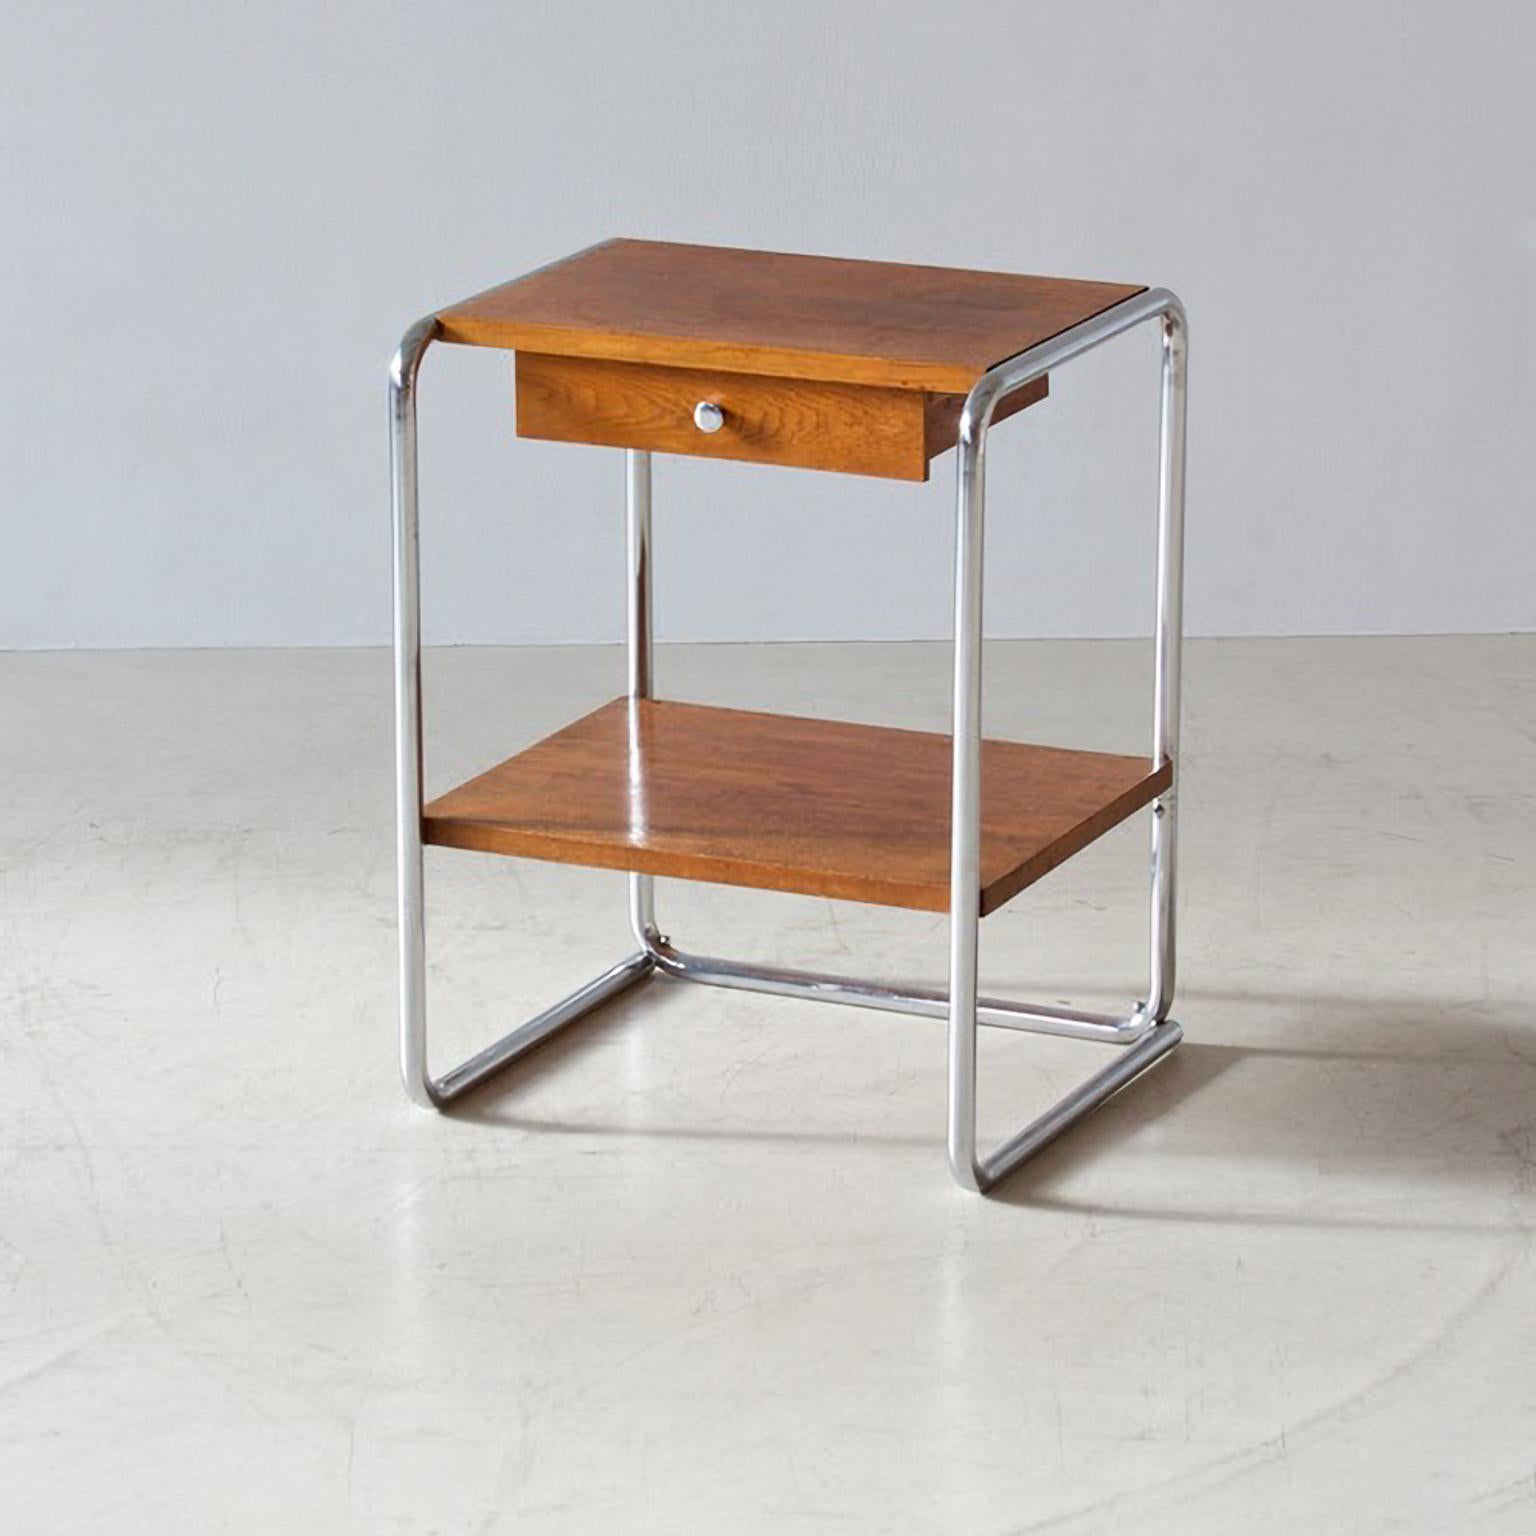 German Bauhaus Tubular Steel End Table With Drawer, Chromed Metal, Veneered Wood, 1930 For Sale